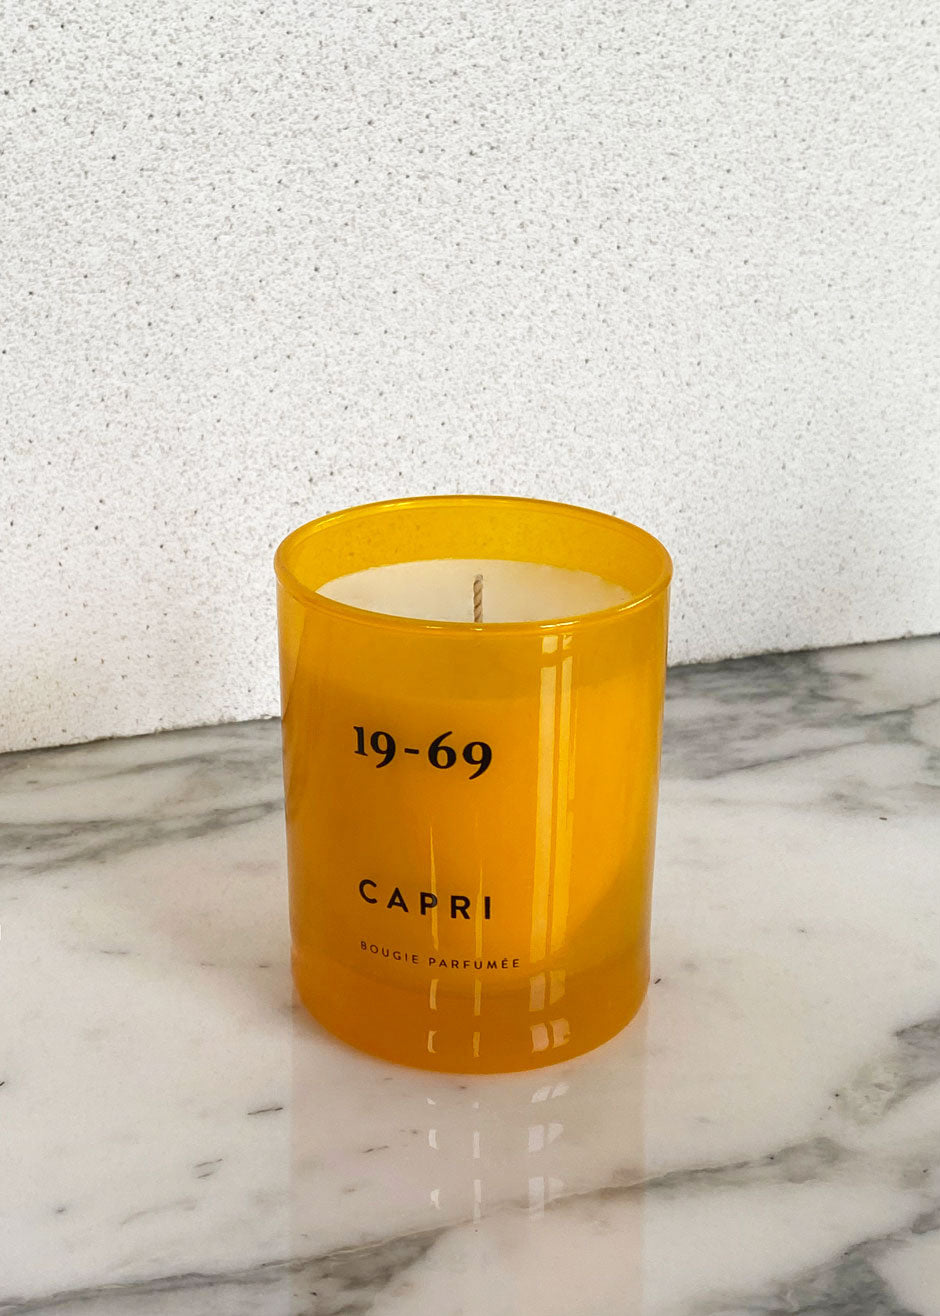 19-69 Candle - Capri - 3